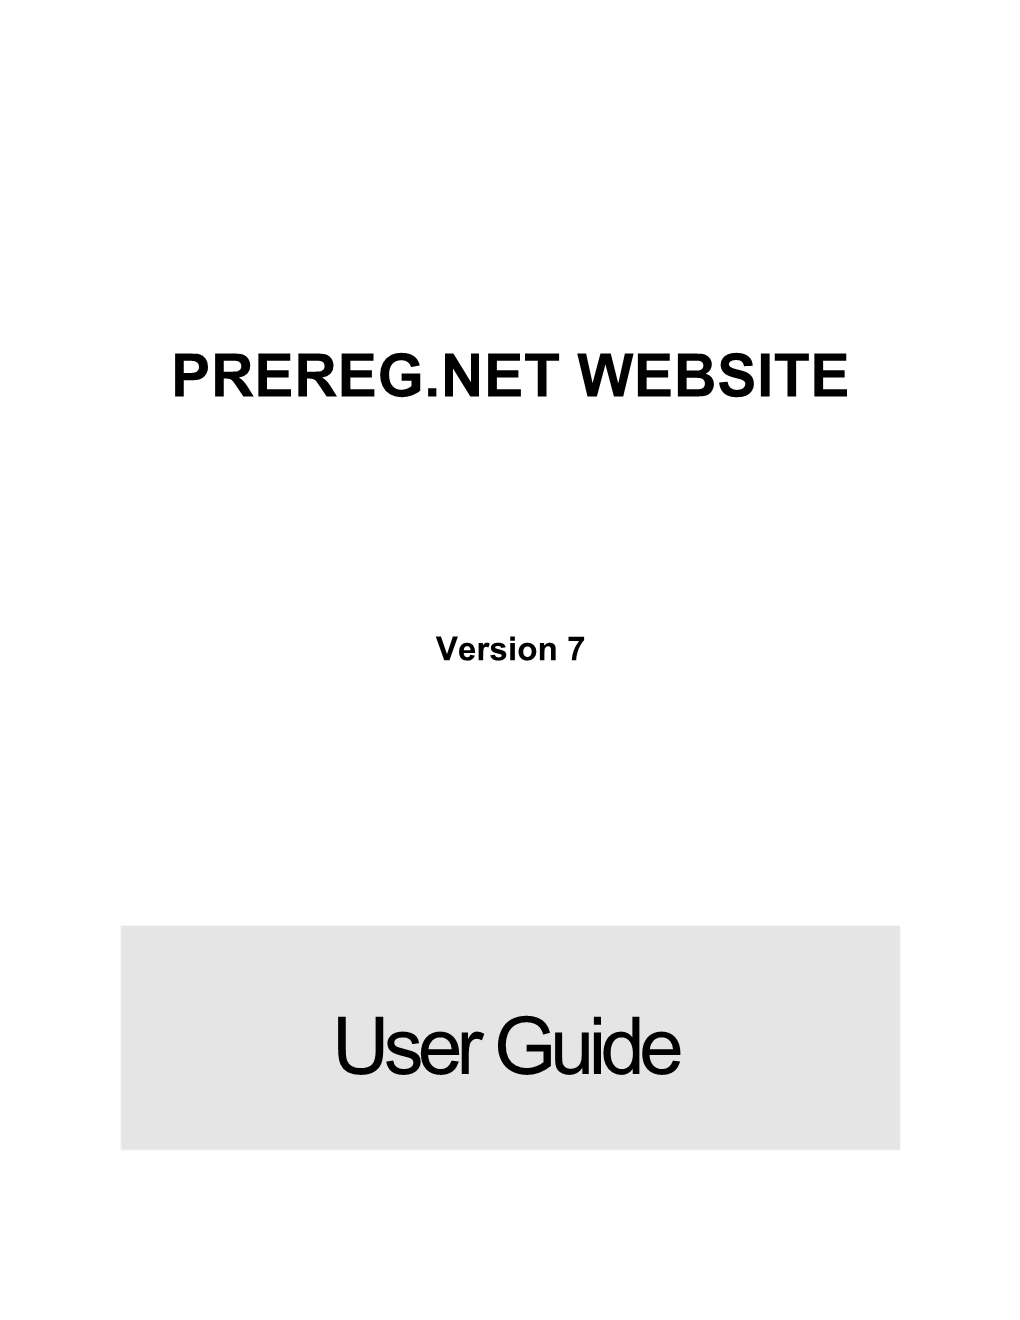 Prereg.NET WEBSITE